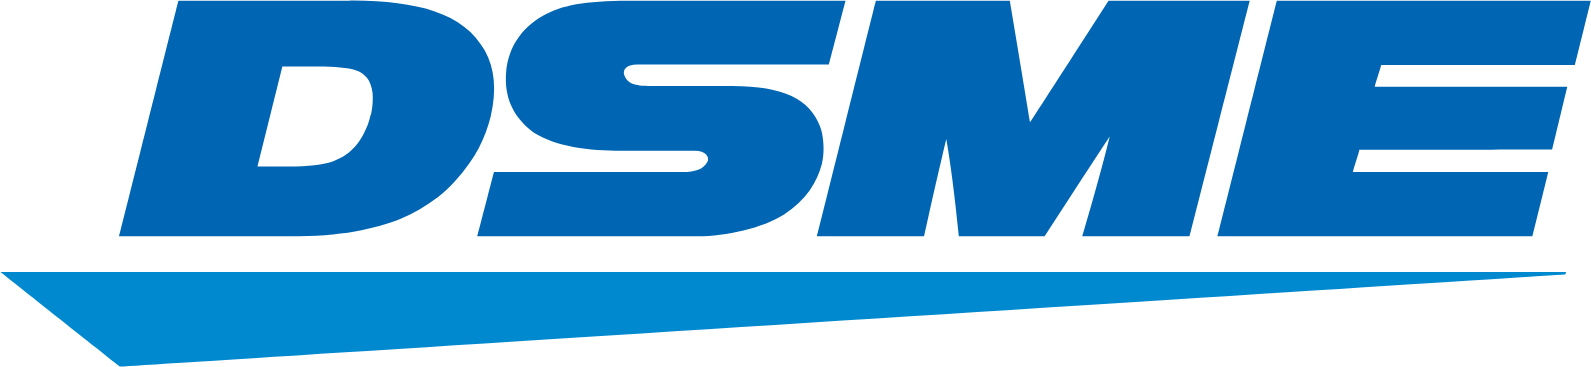 DSME (Daewoo Shipbuilding) logo (transparent PNG)